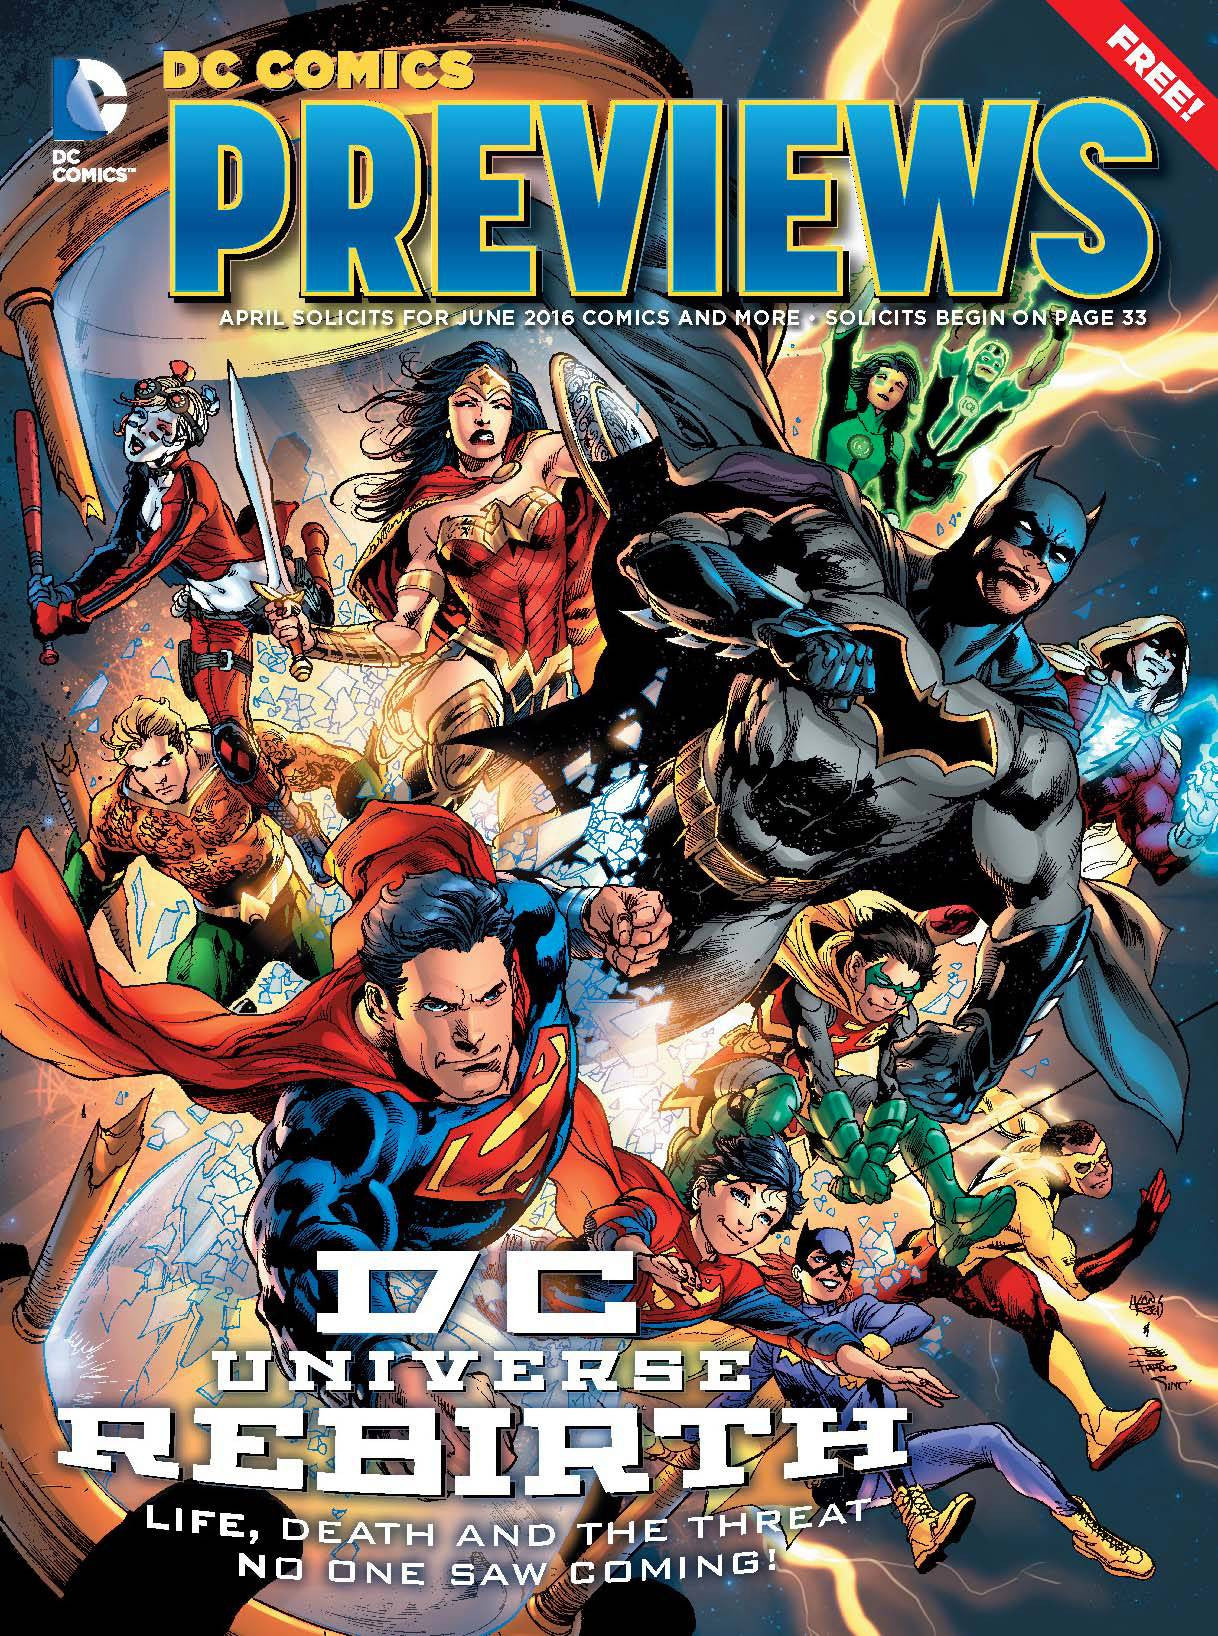 DC PREVIEWS APRIL 2016 COVER